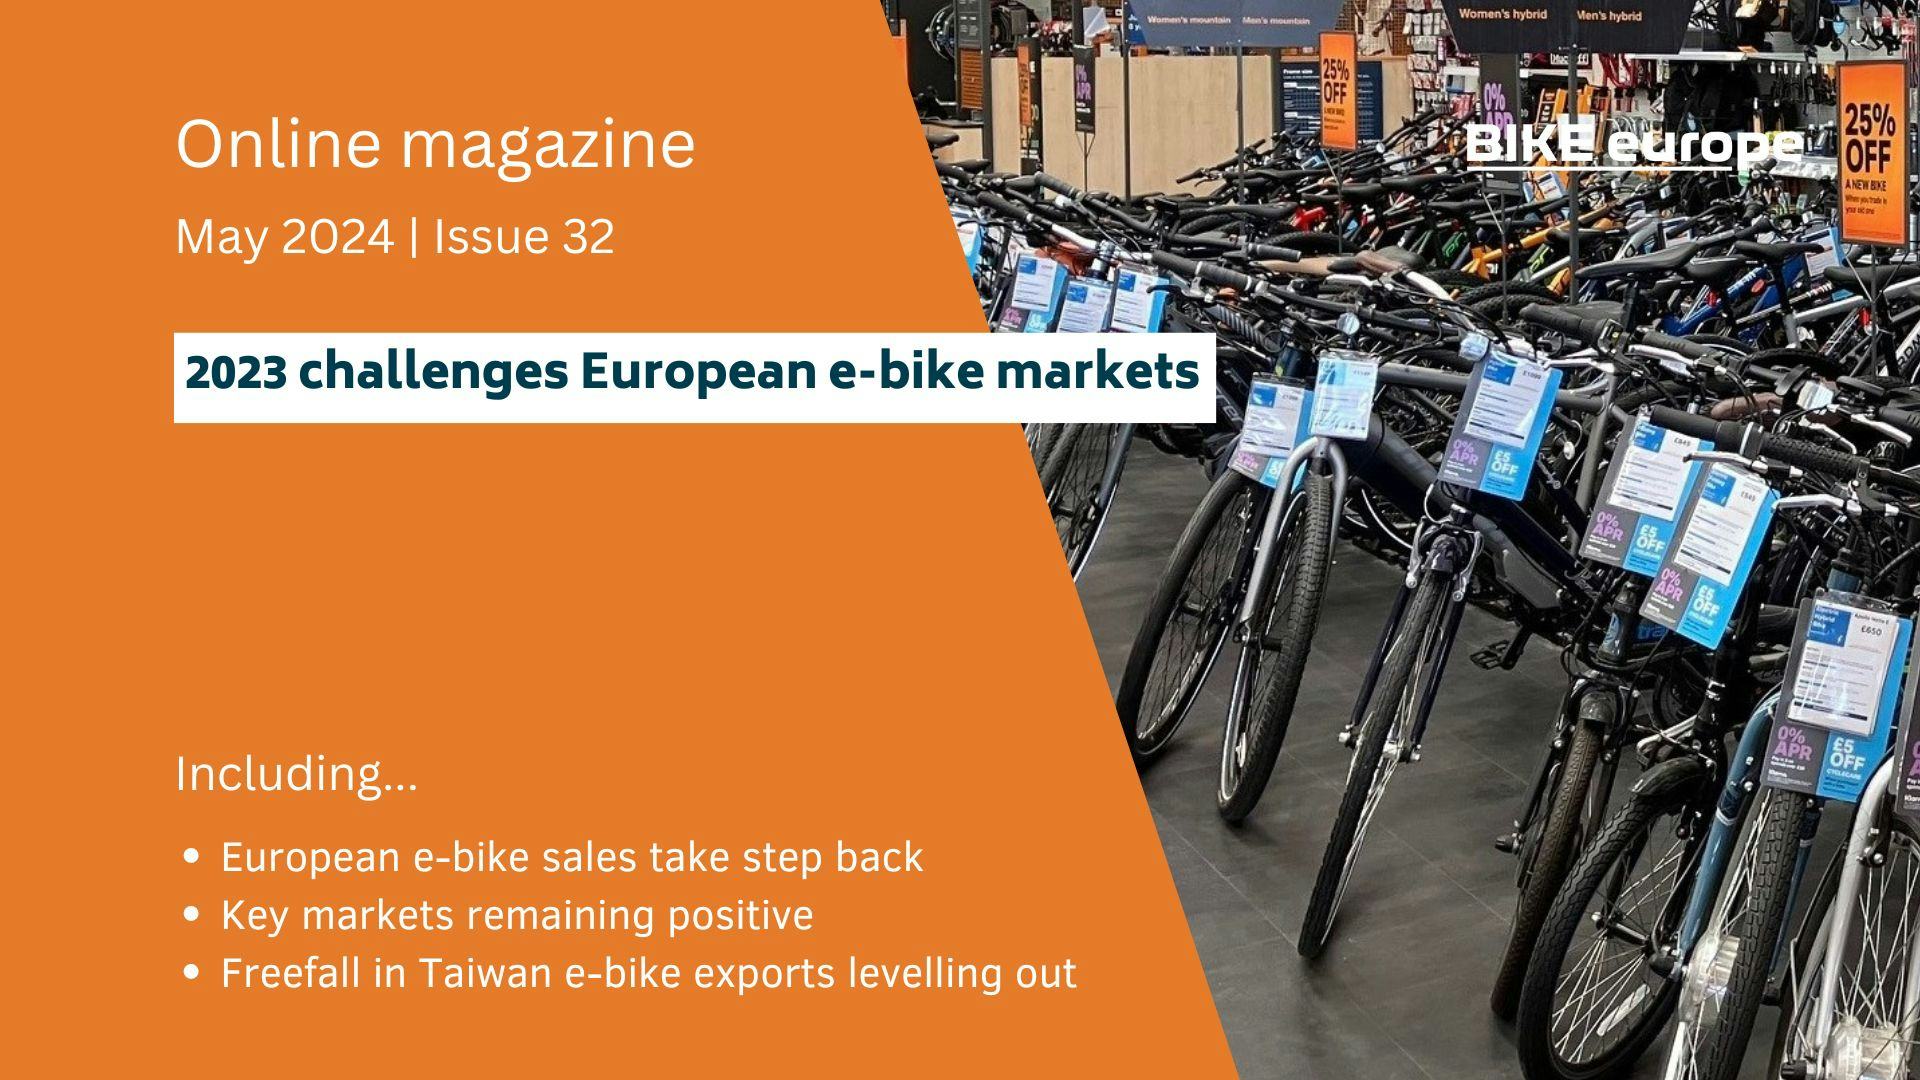 2023 challenges European e-bike markets